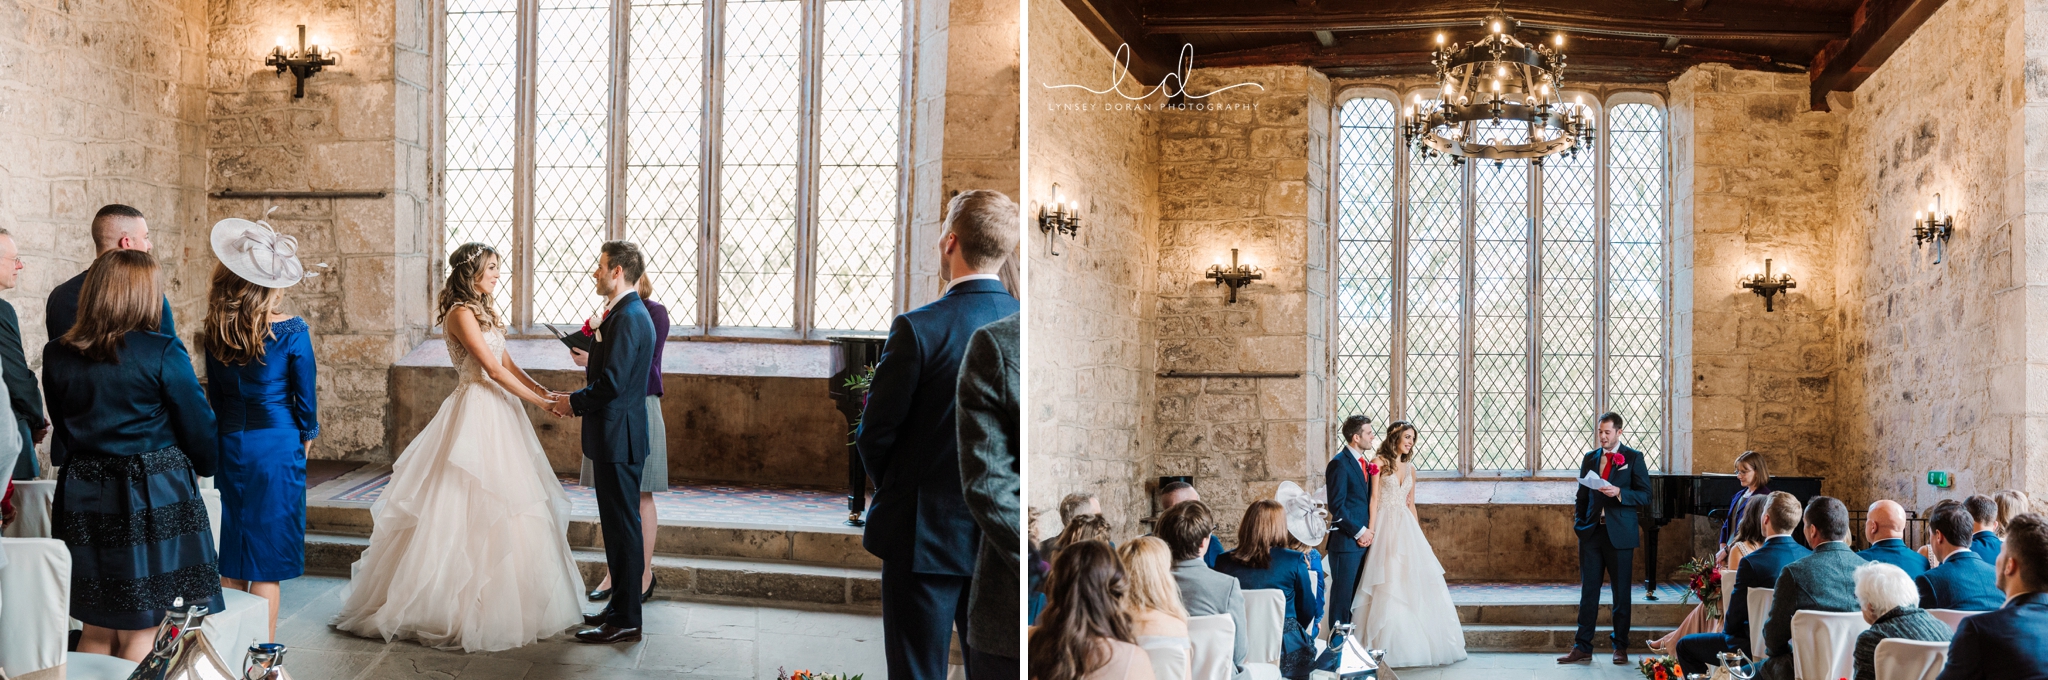 Rustic Wedding Photographers Yorkshire | Barden Towers Wedding Photos_0019